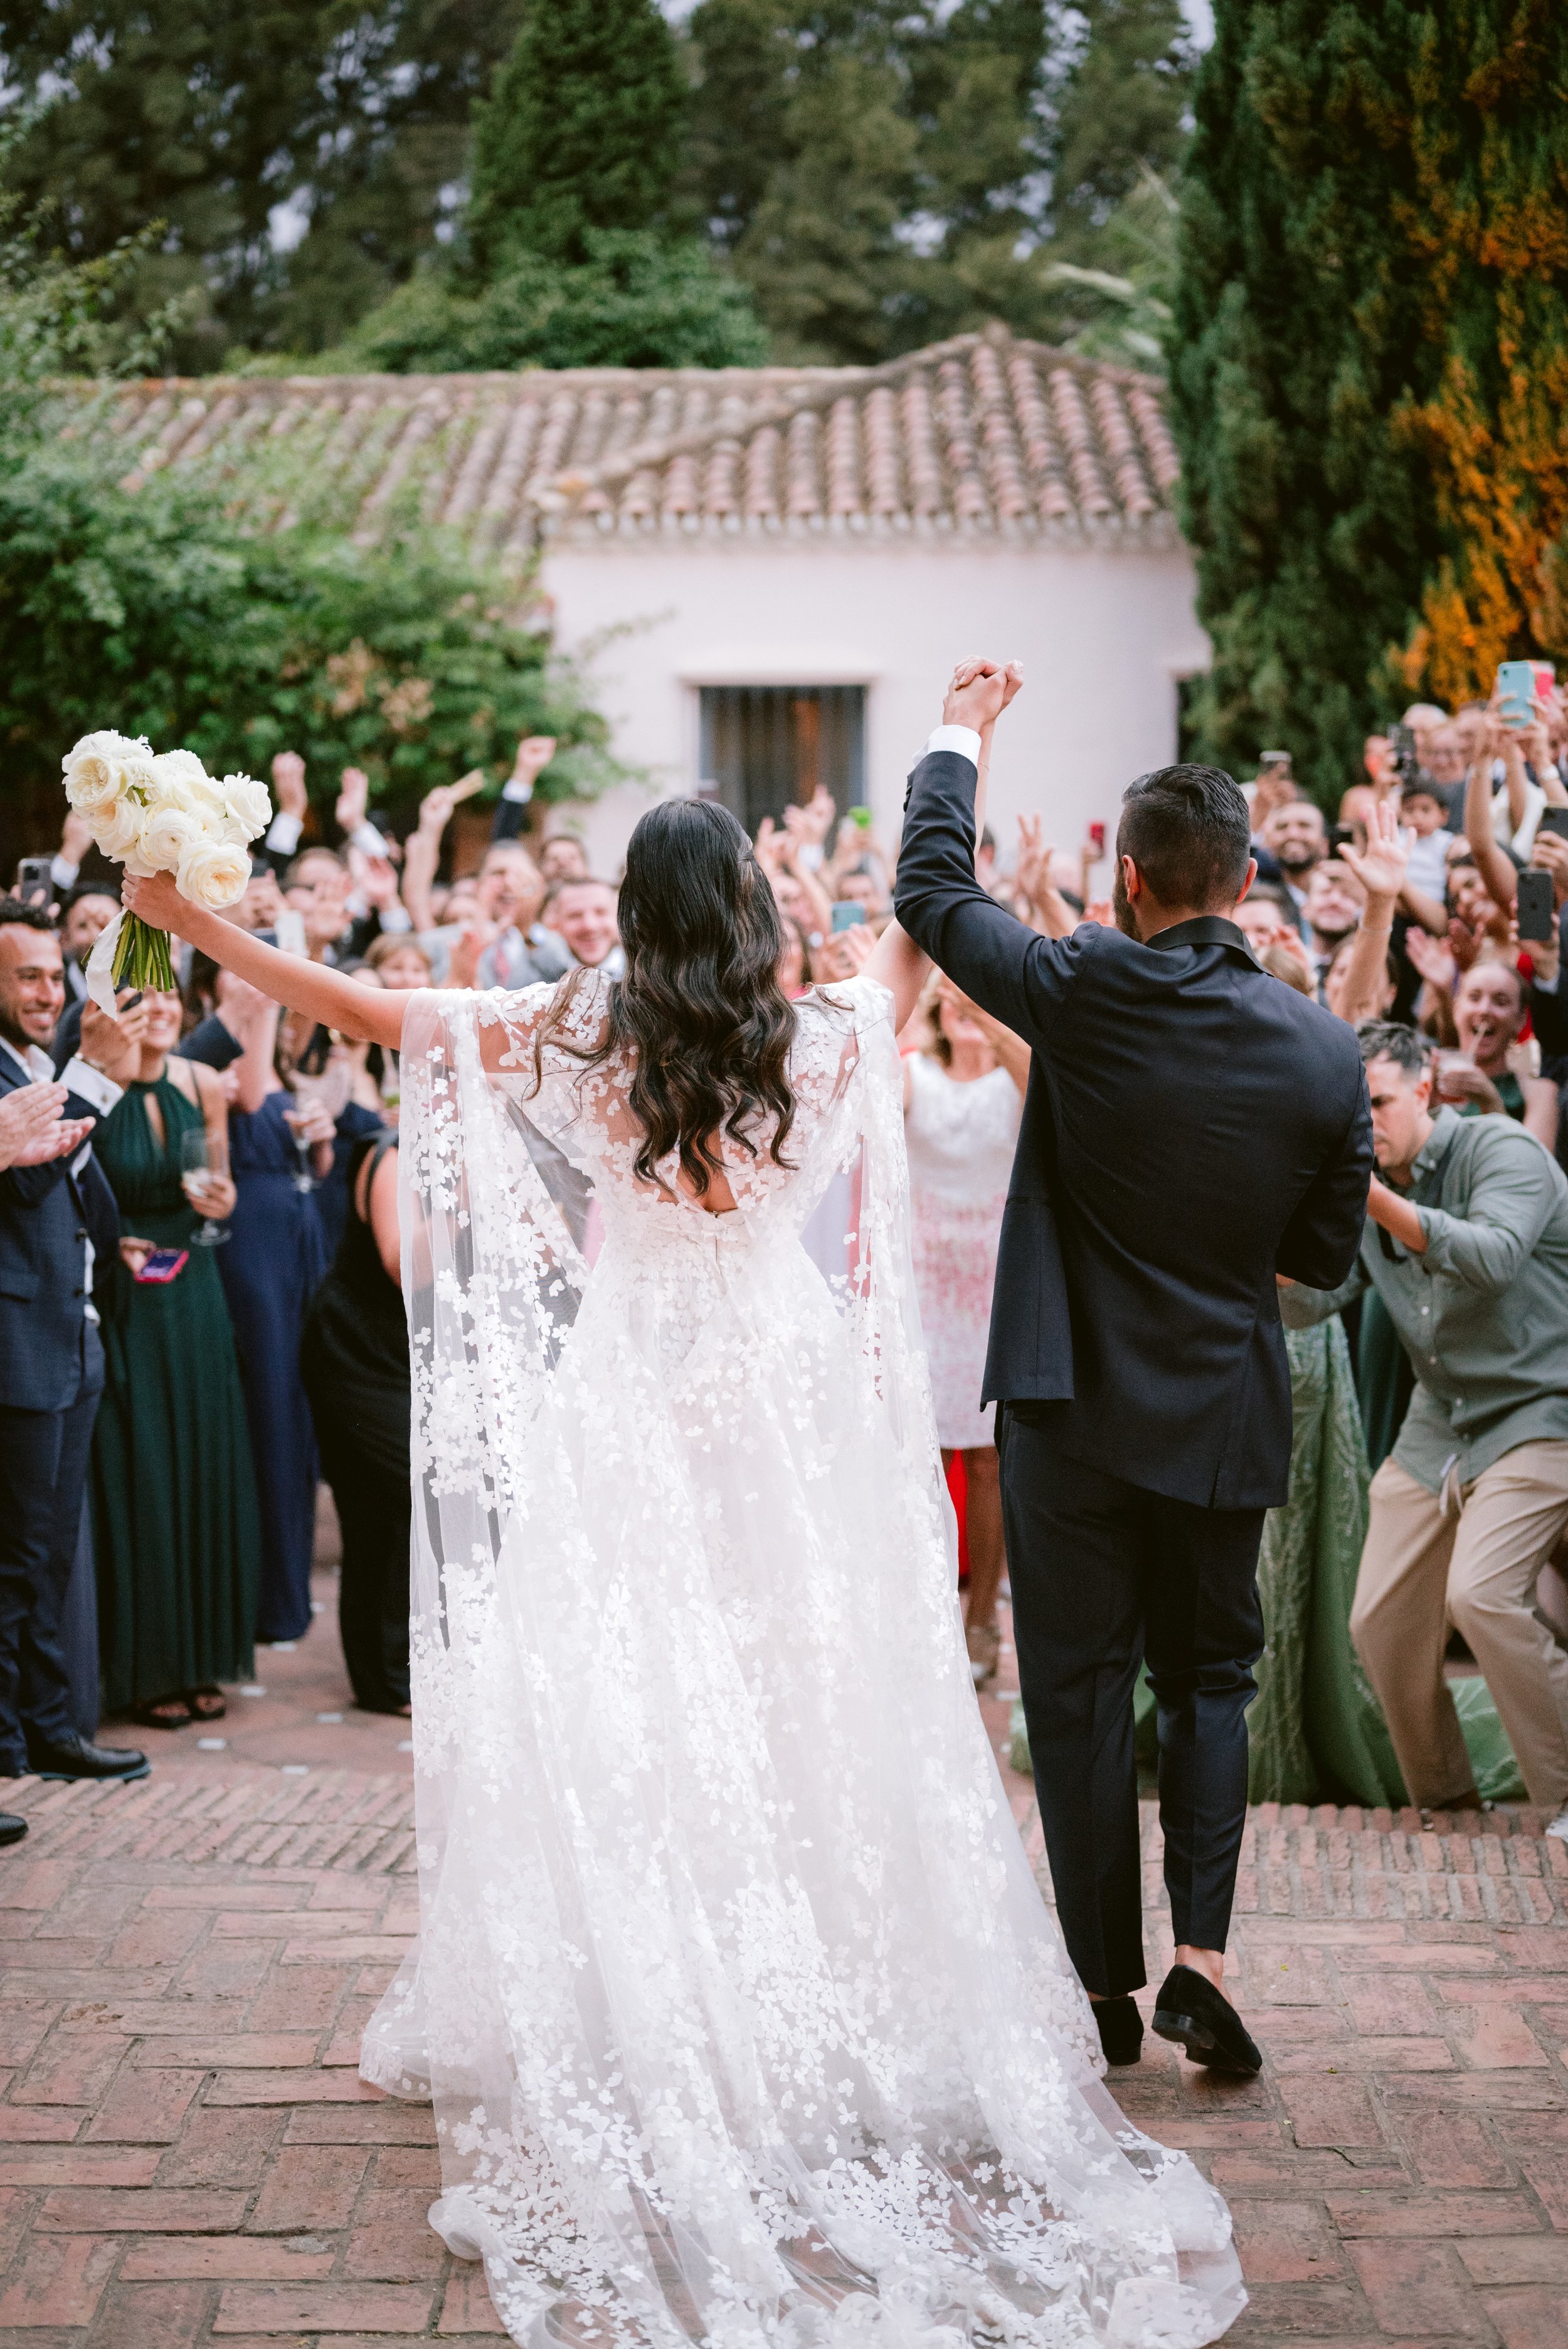 D&M's Wedding at El Molino del Duque-4344.jpg